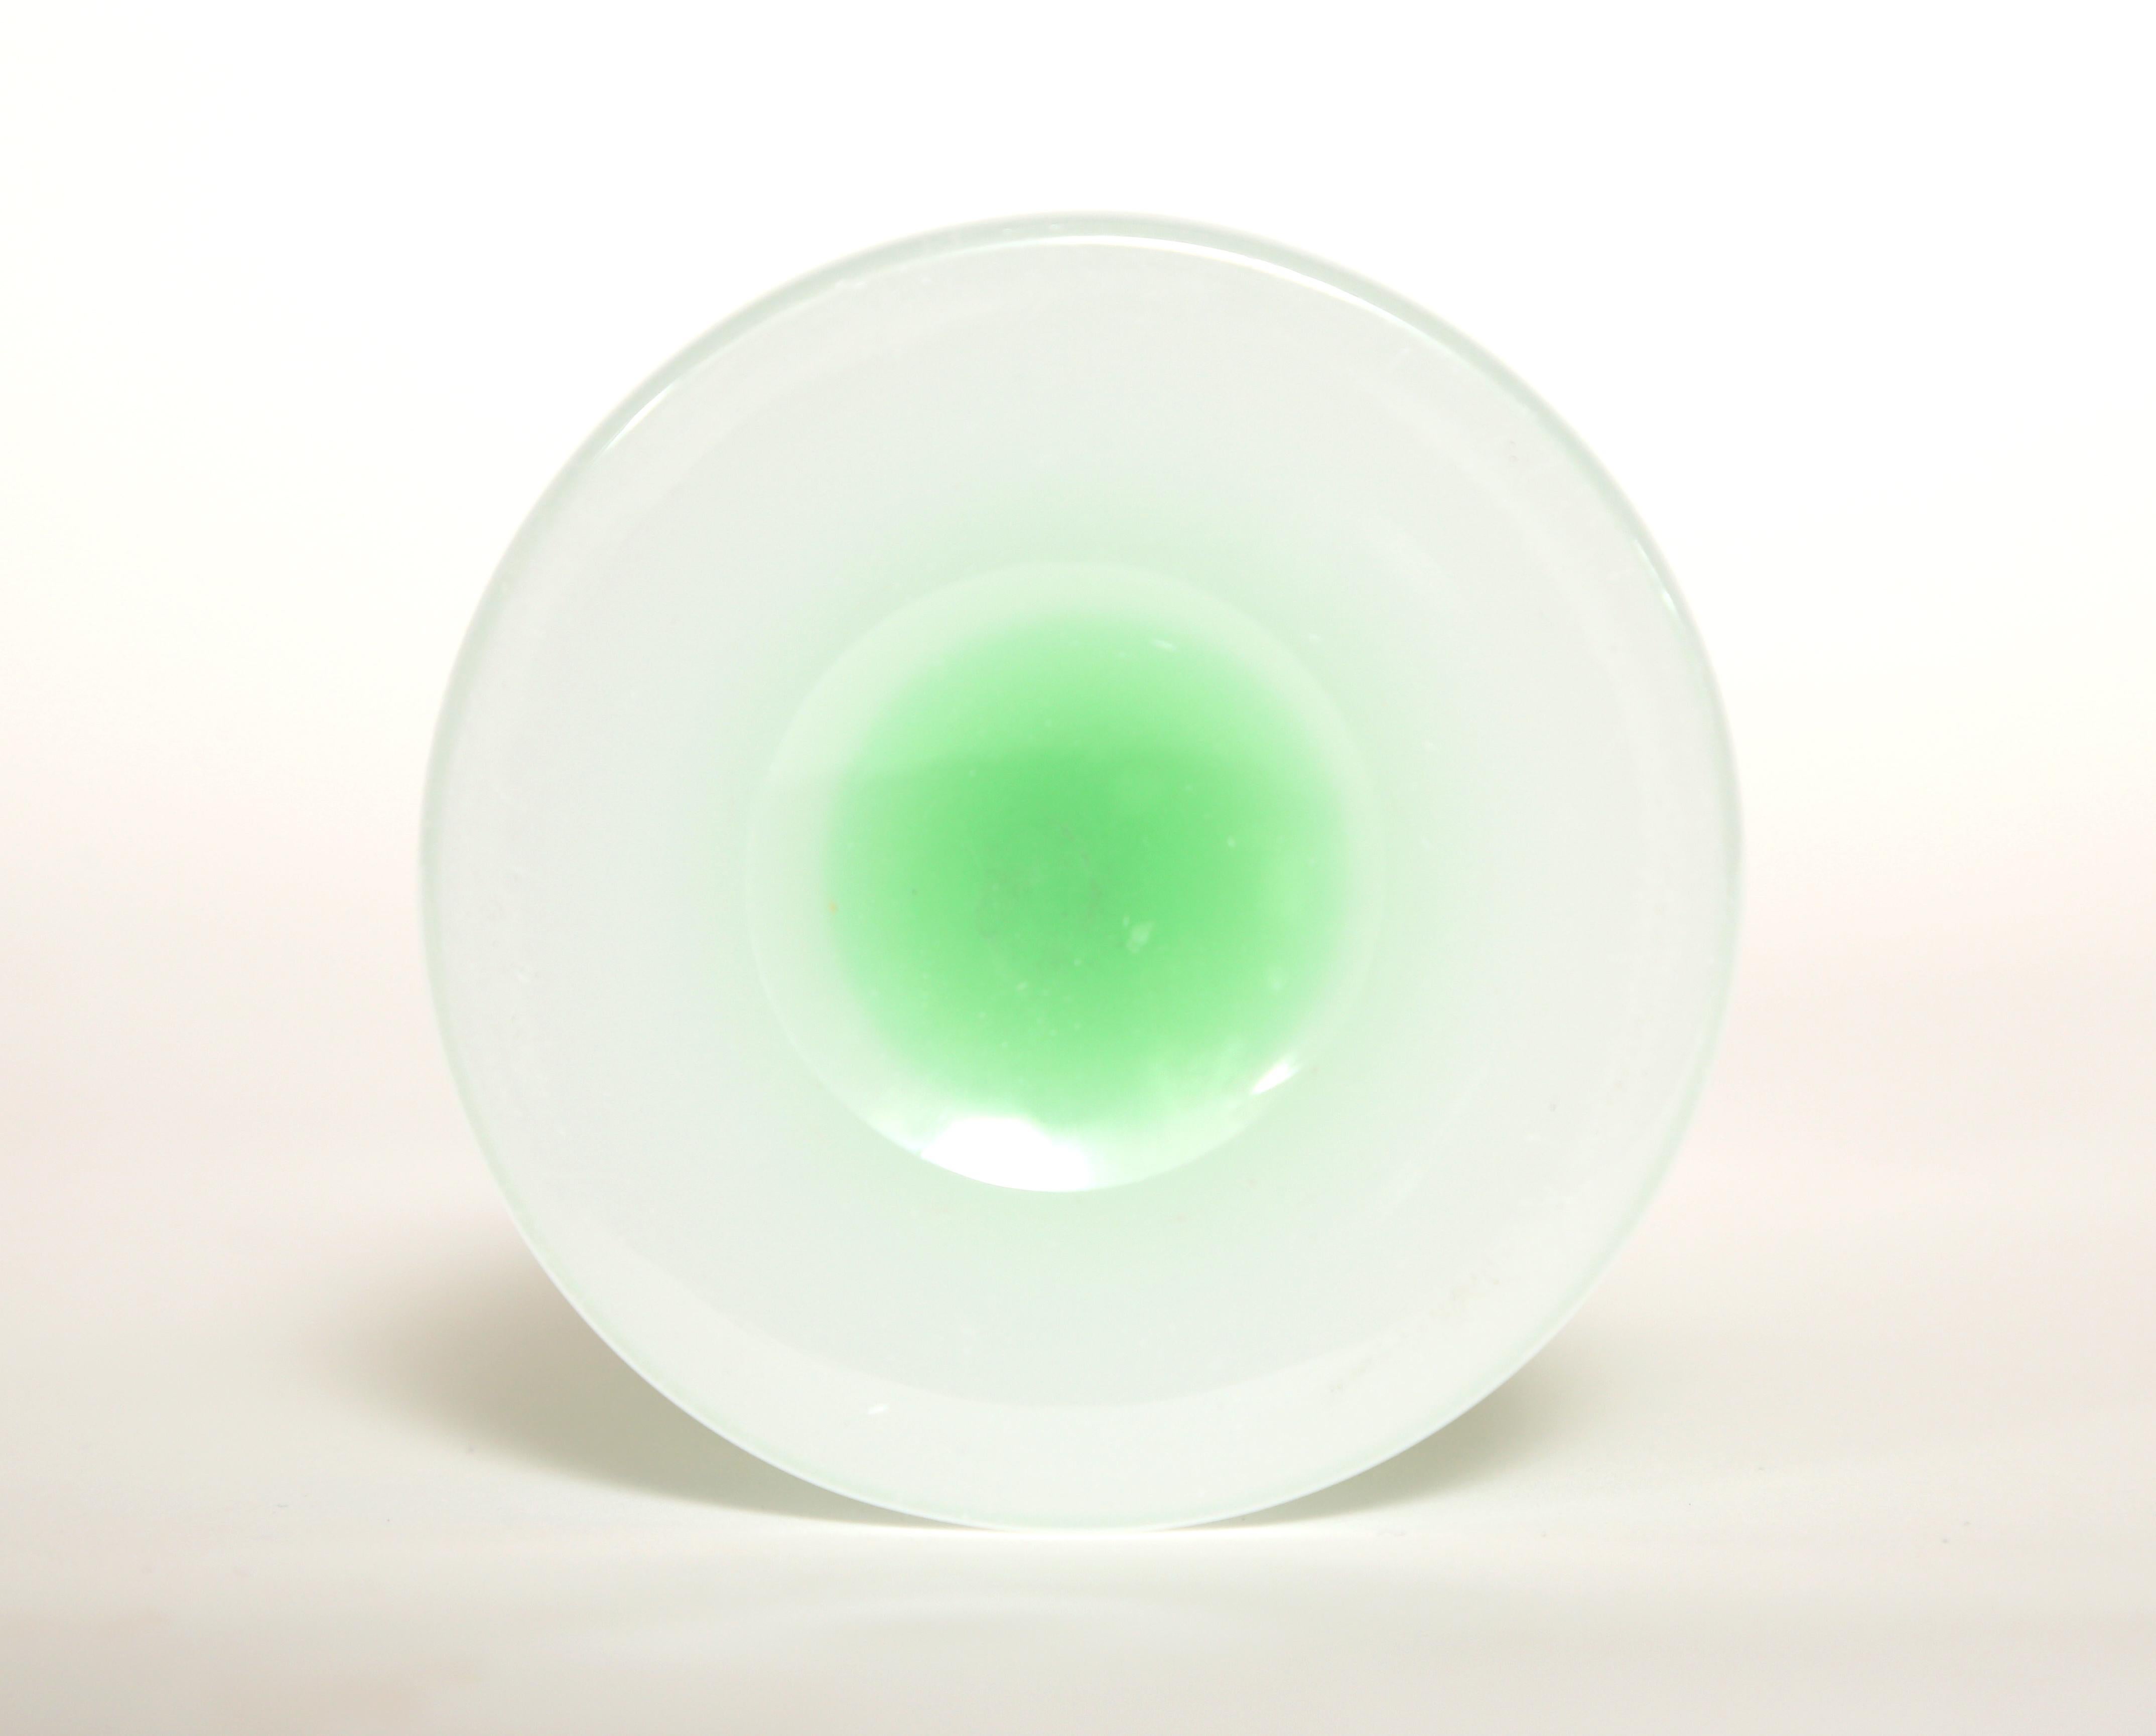 American Jade Green Opaline Stemmed Glass/Goblet by Steuben/Stevens & Williams 